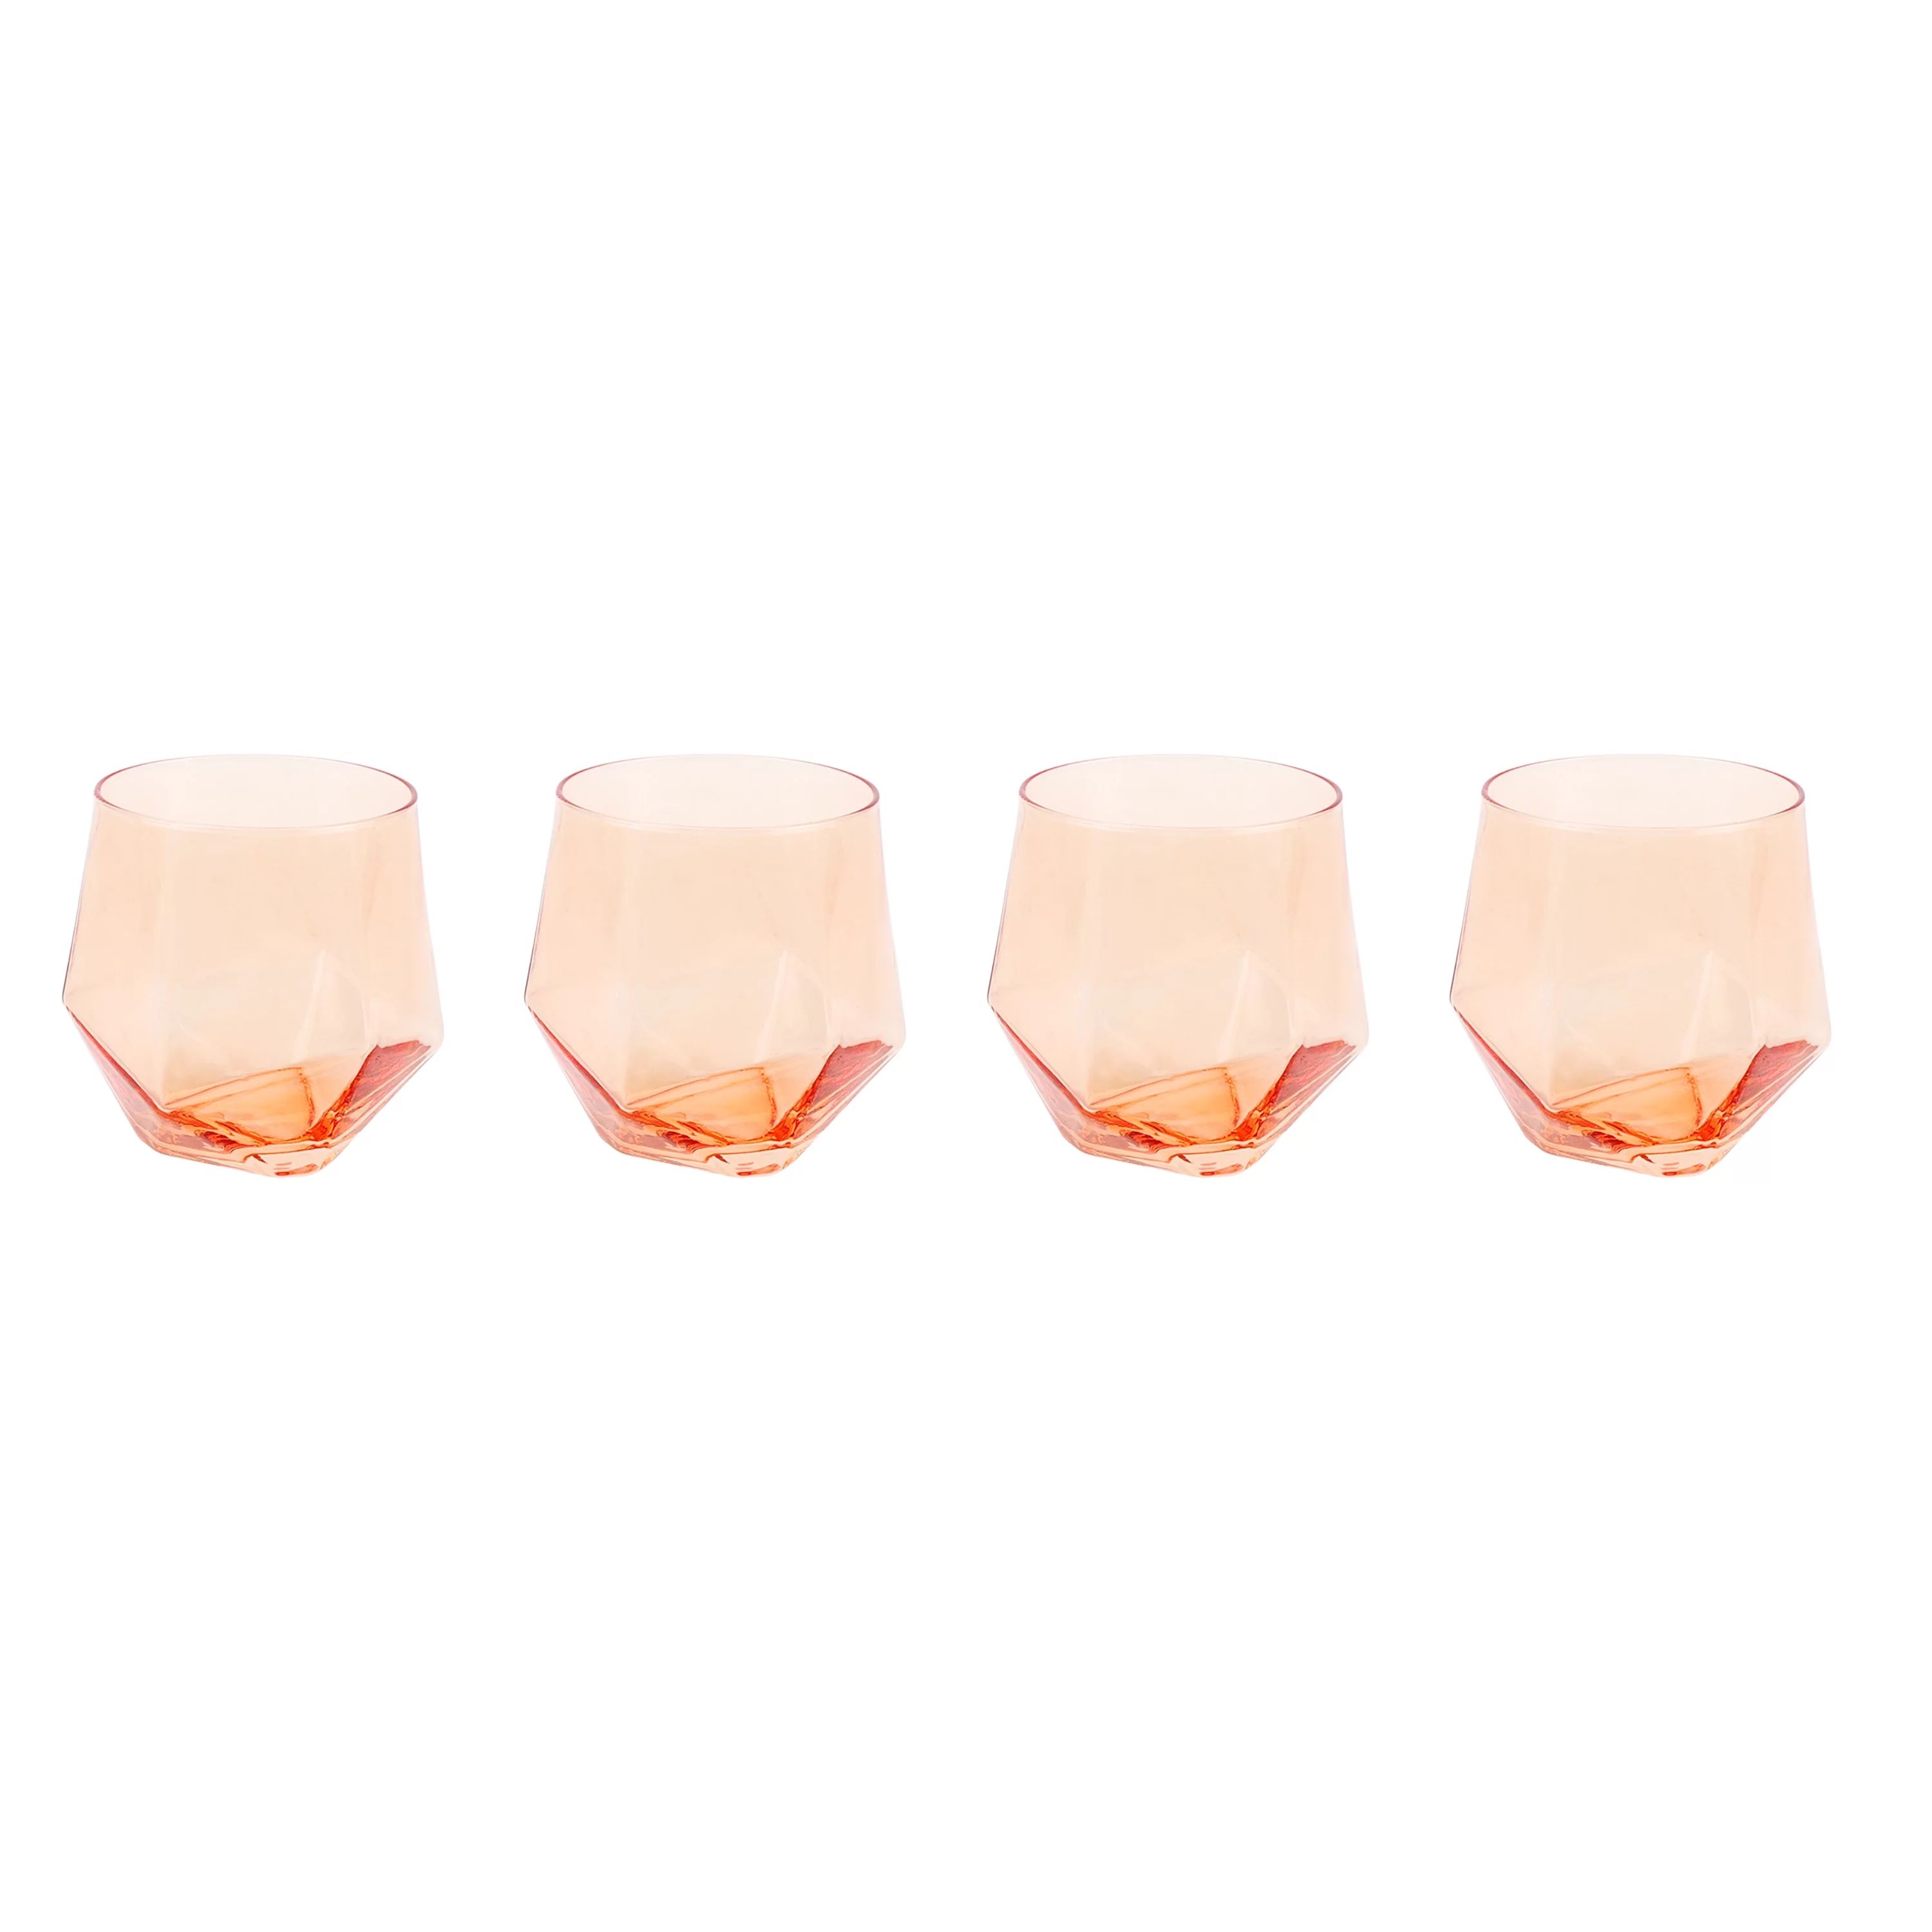 Just Feed Me by Jessie James Decker 4-Piece 15-Ounce Stemless Wine Glass Set, Peach Amber | Walmart (US)